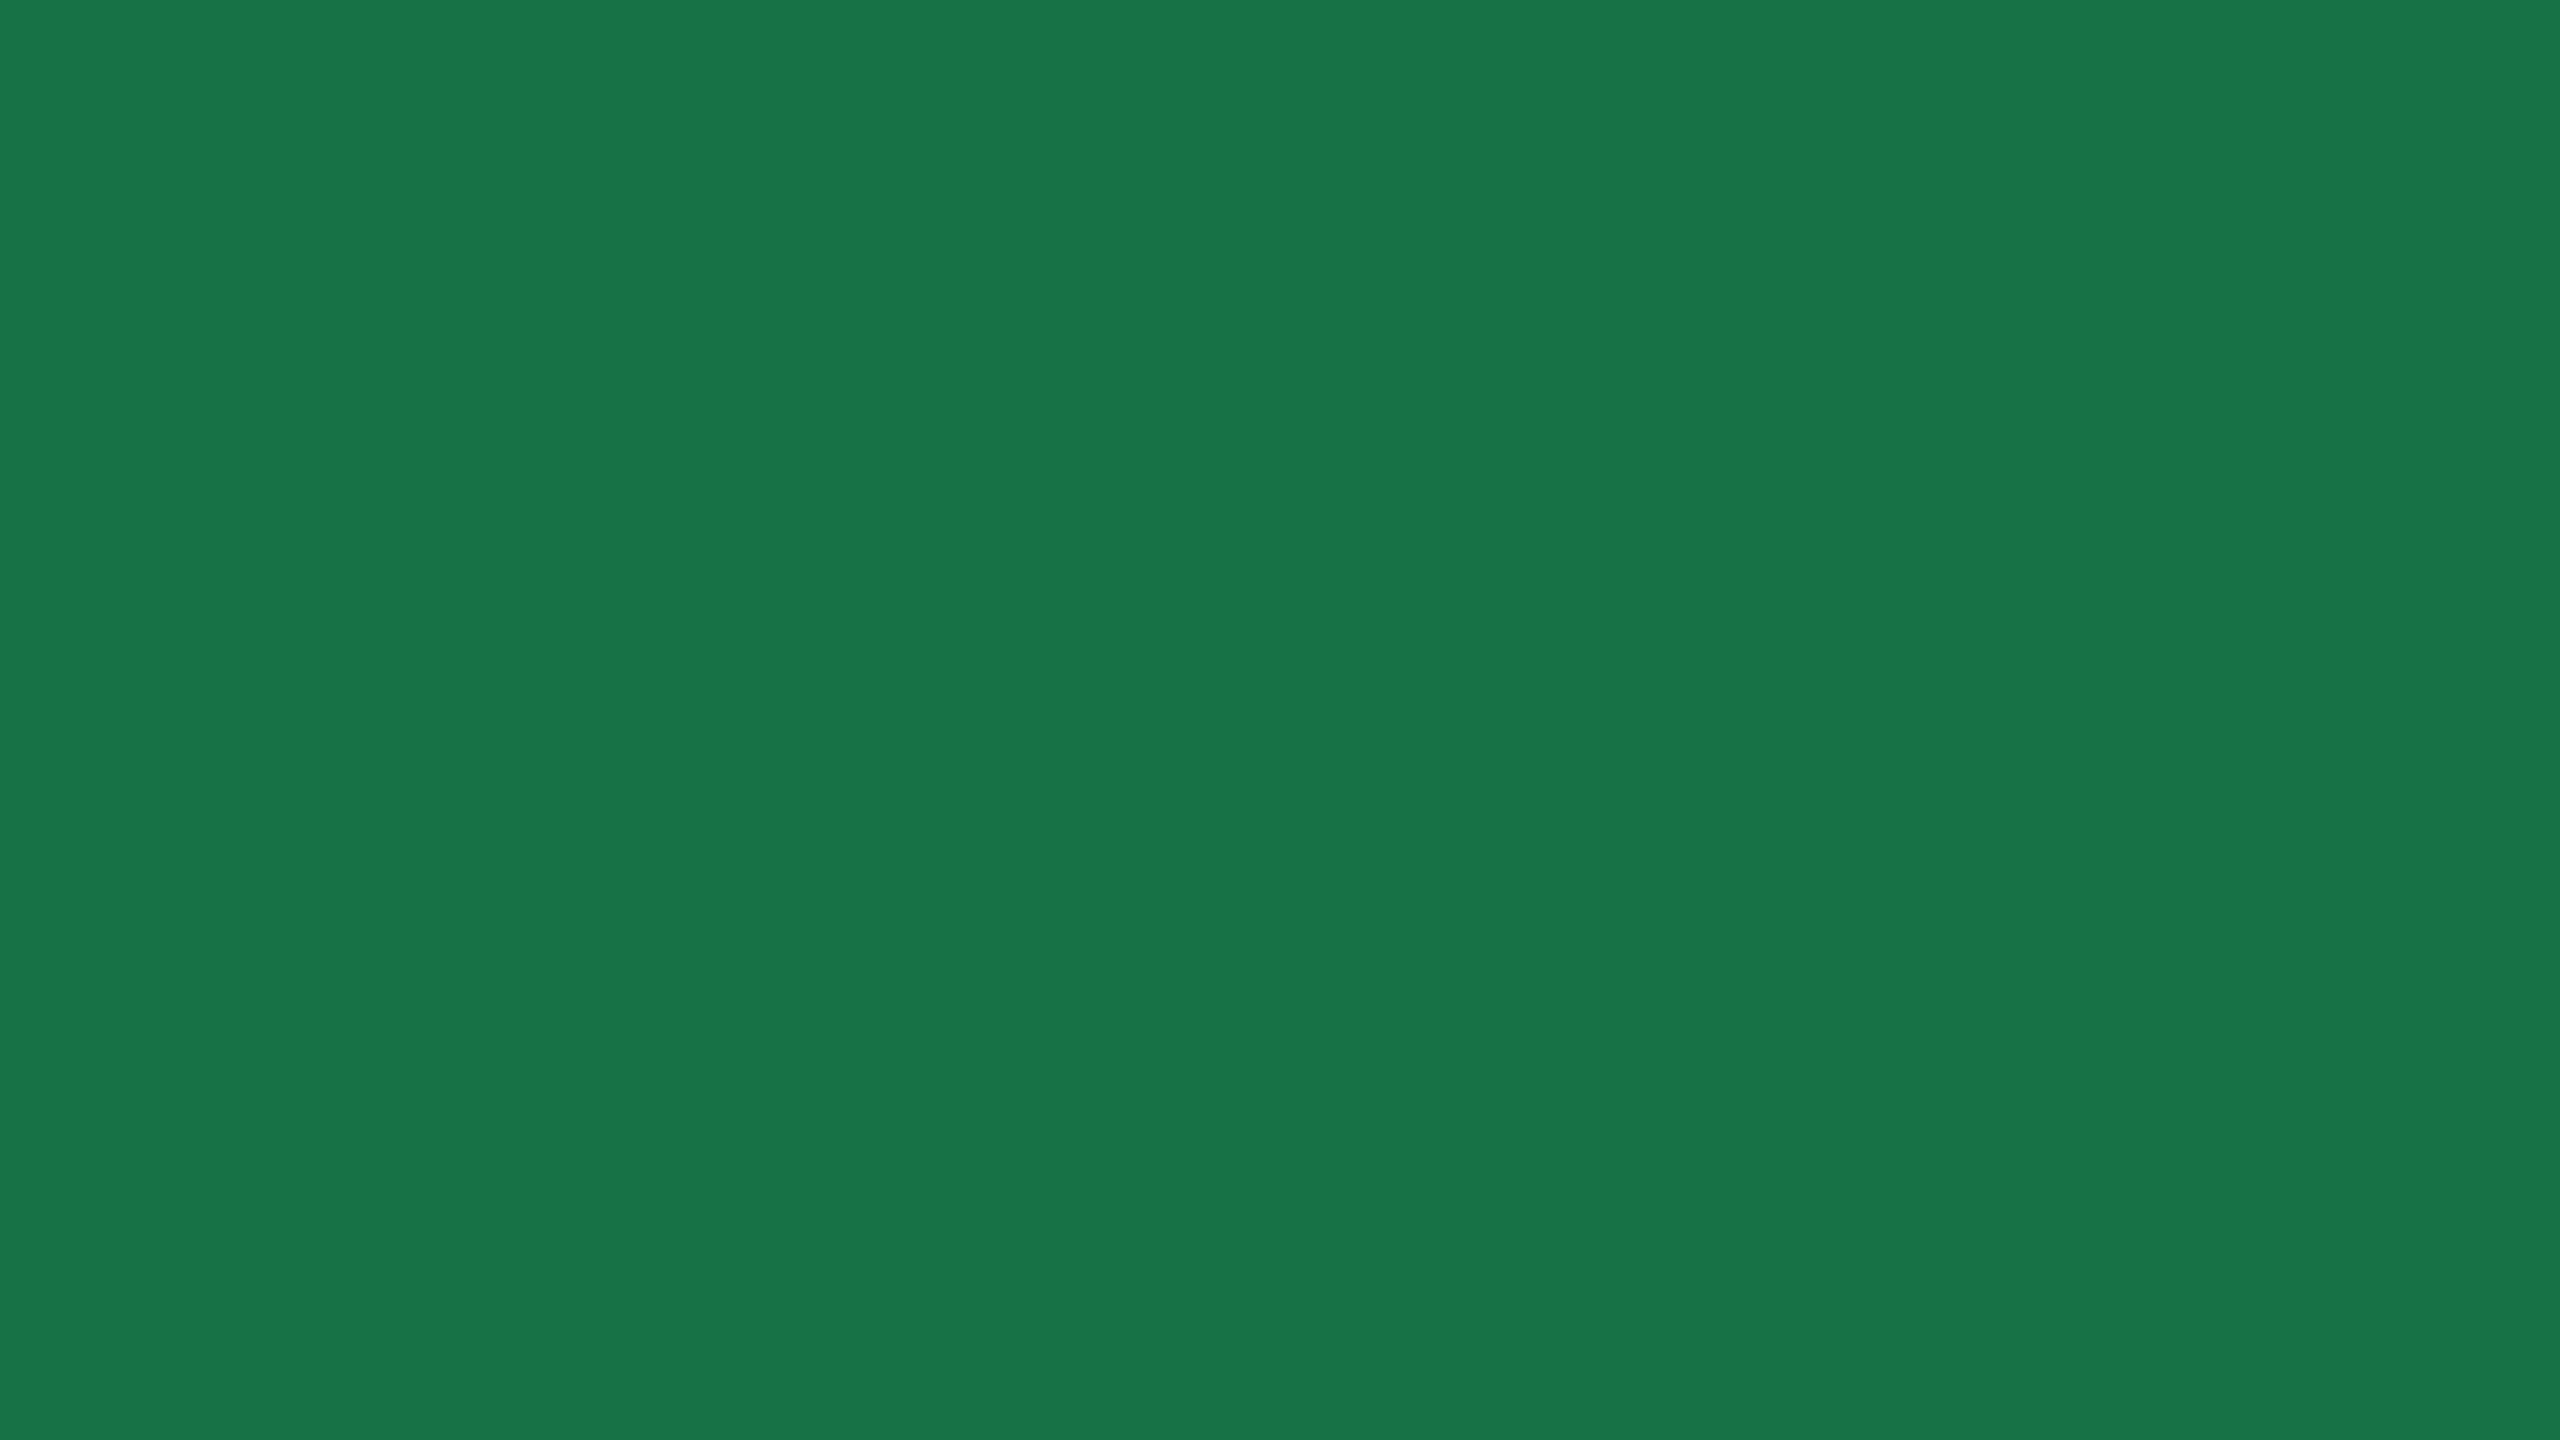 2560x1440 Dark Spring Green Solid Color Background